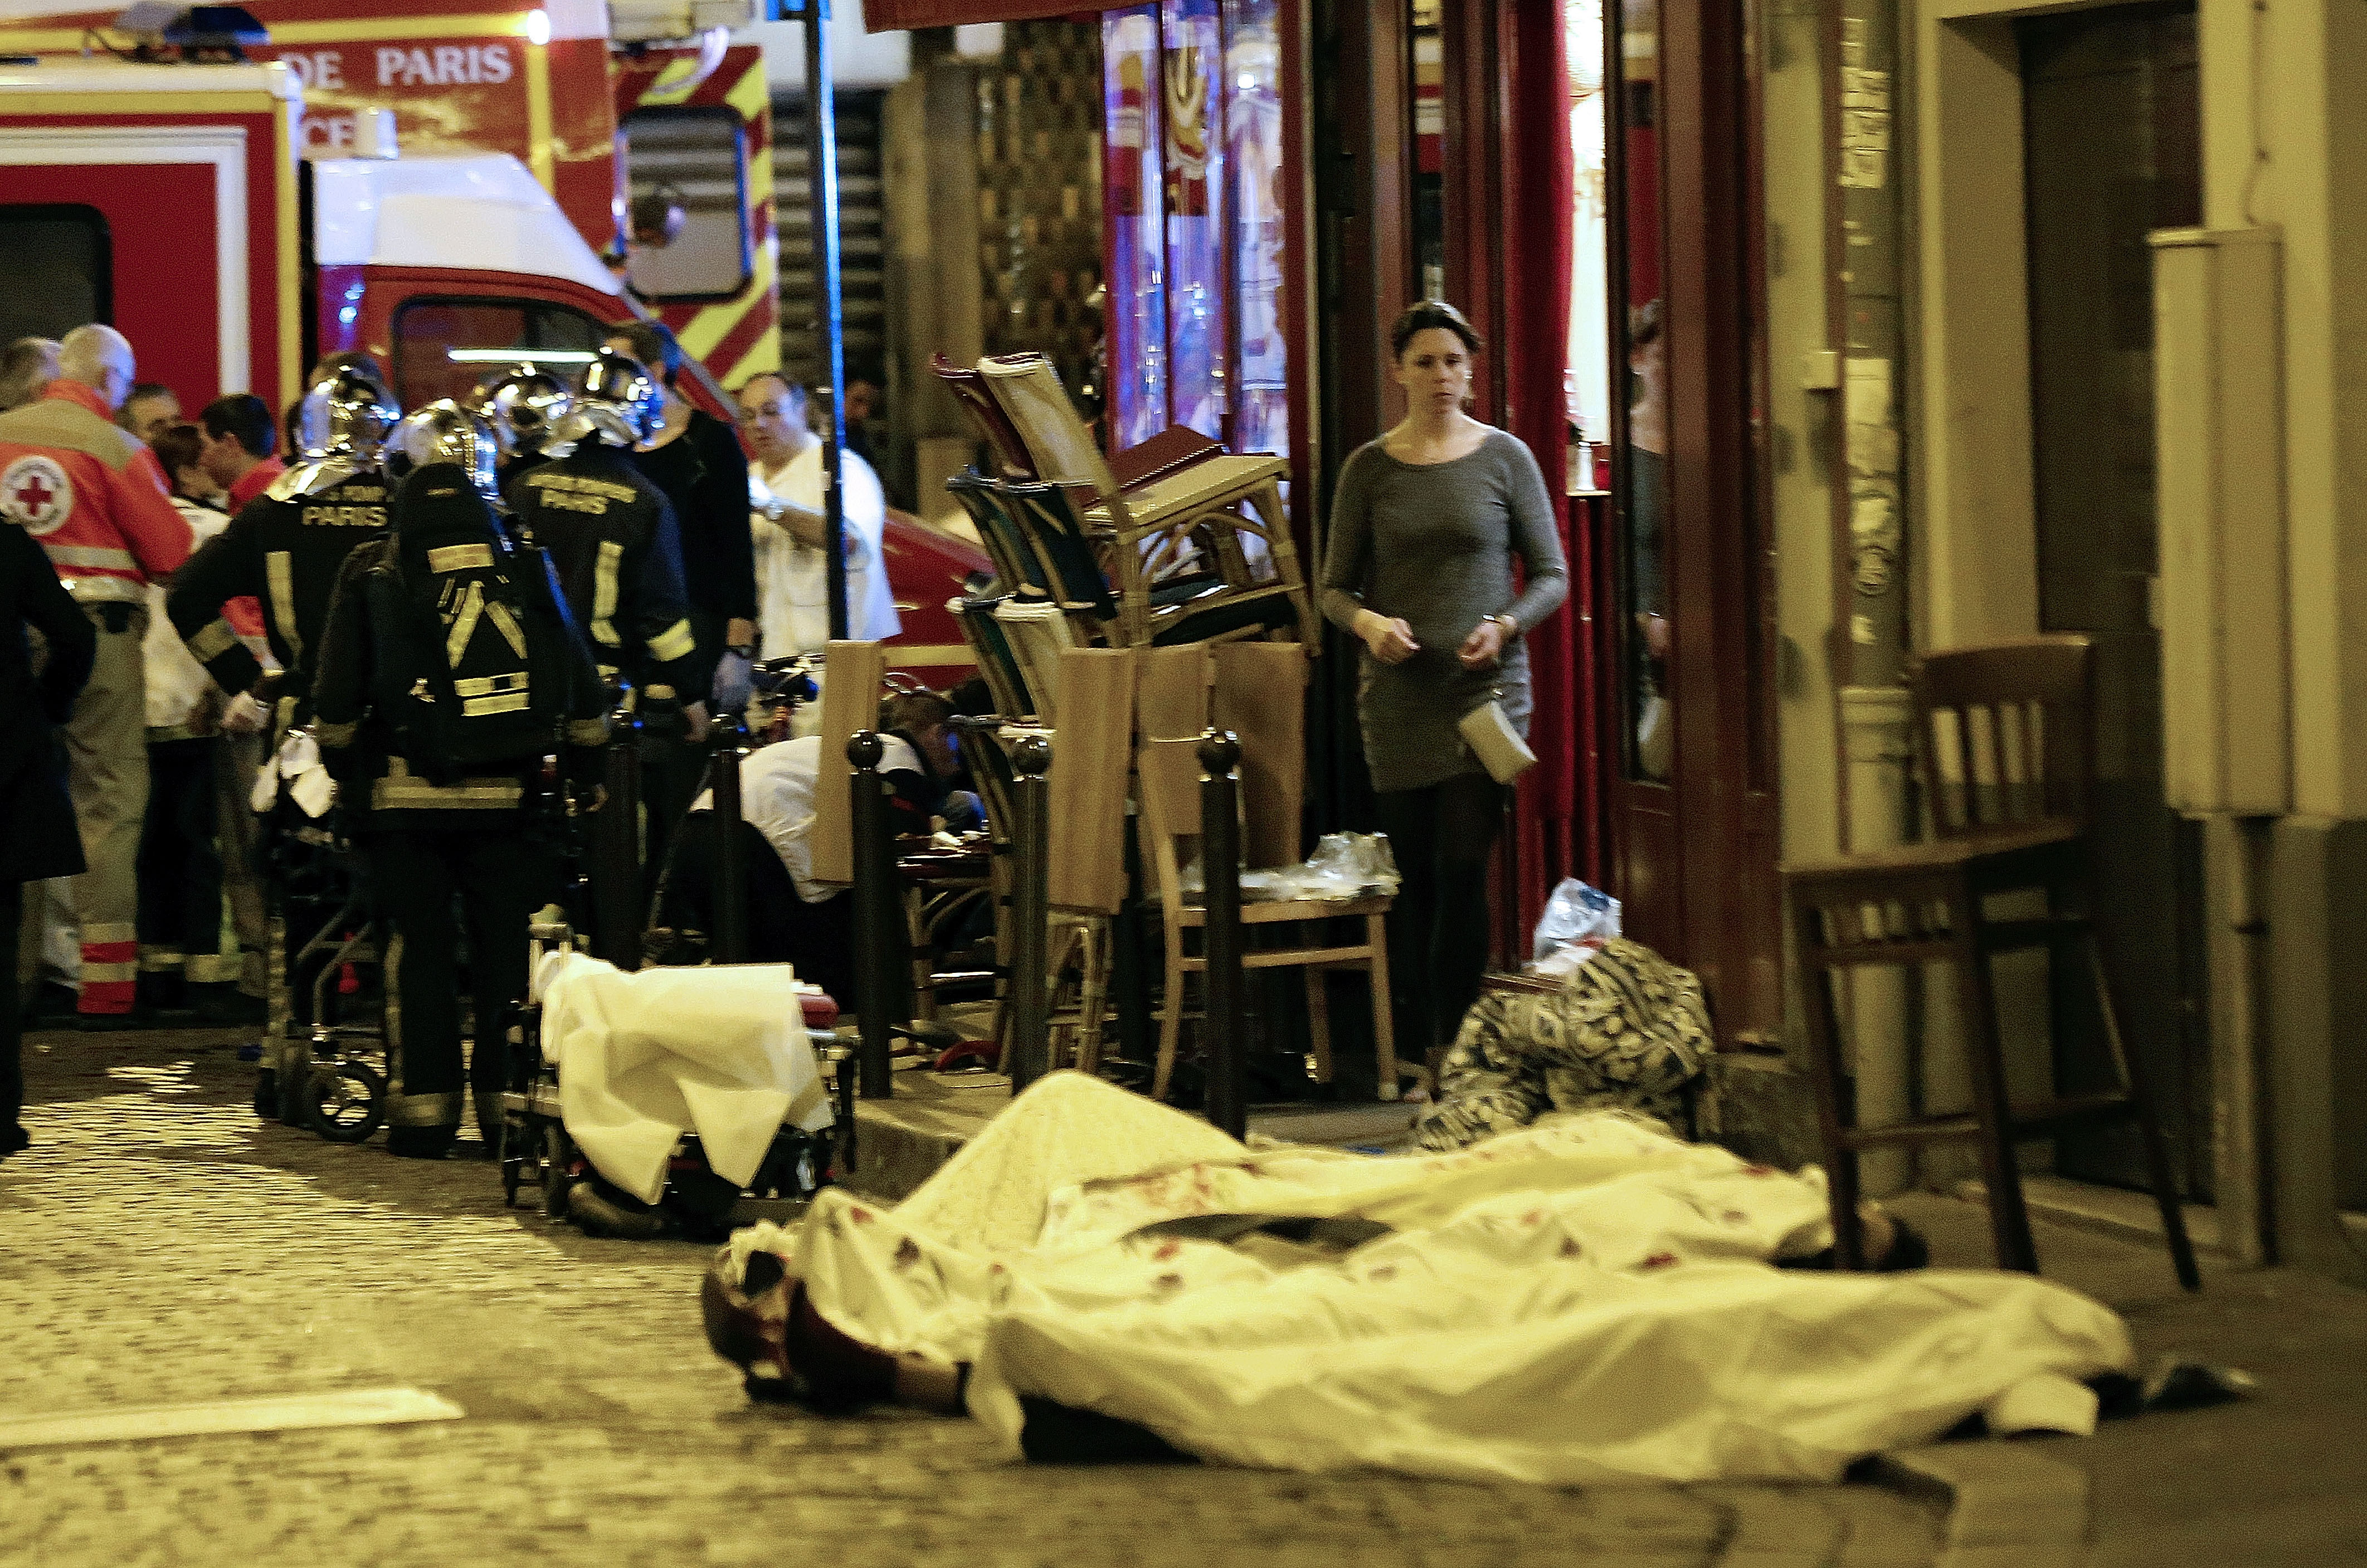 127 dead in Paris attacks, worst since WWII